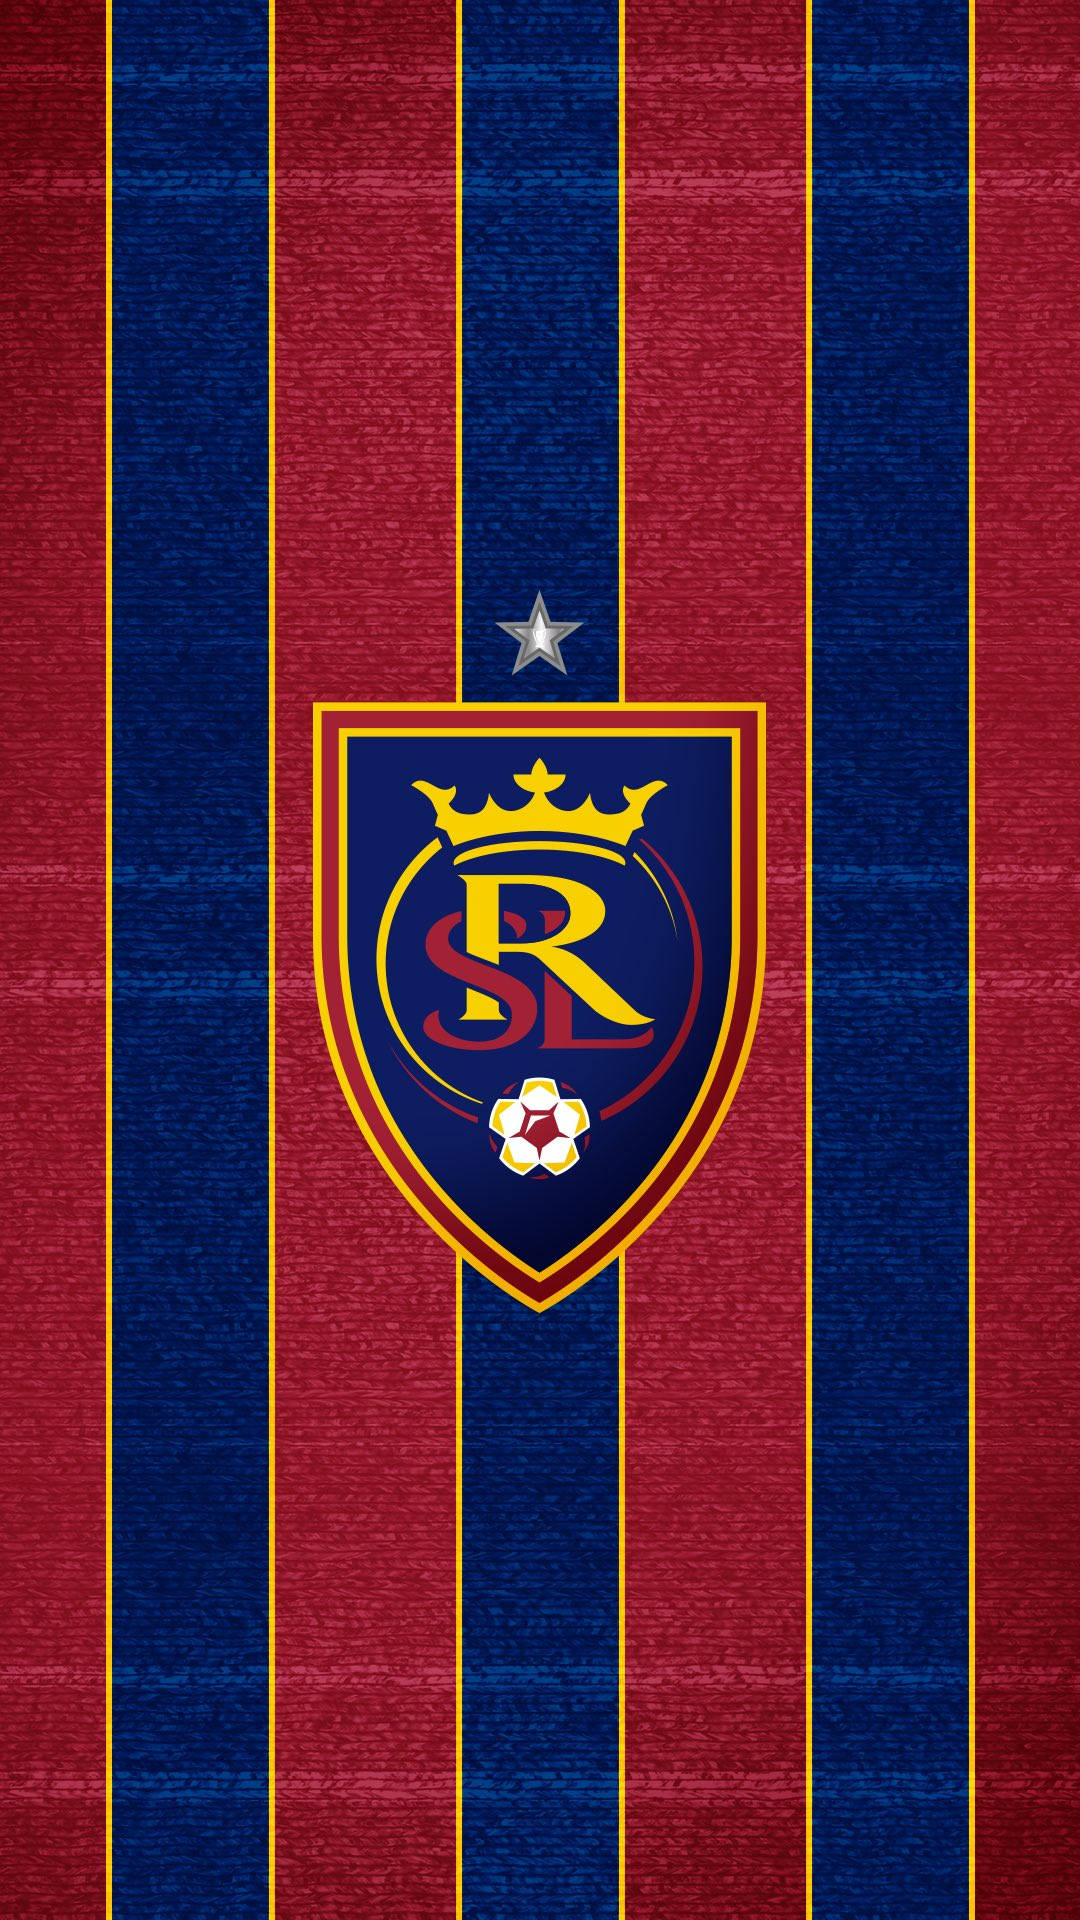 Logotipodel Equipo De Fútbol Real Salt Lake De La Franquicia De Fútbol. Fondo de pantalla